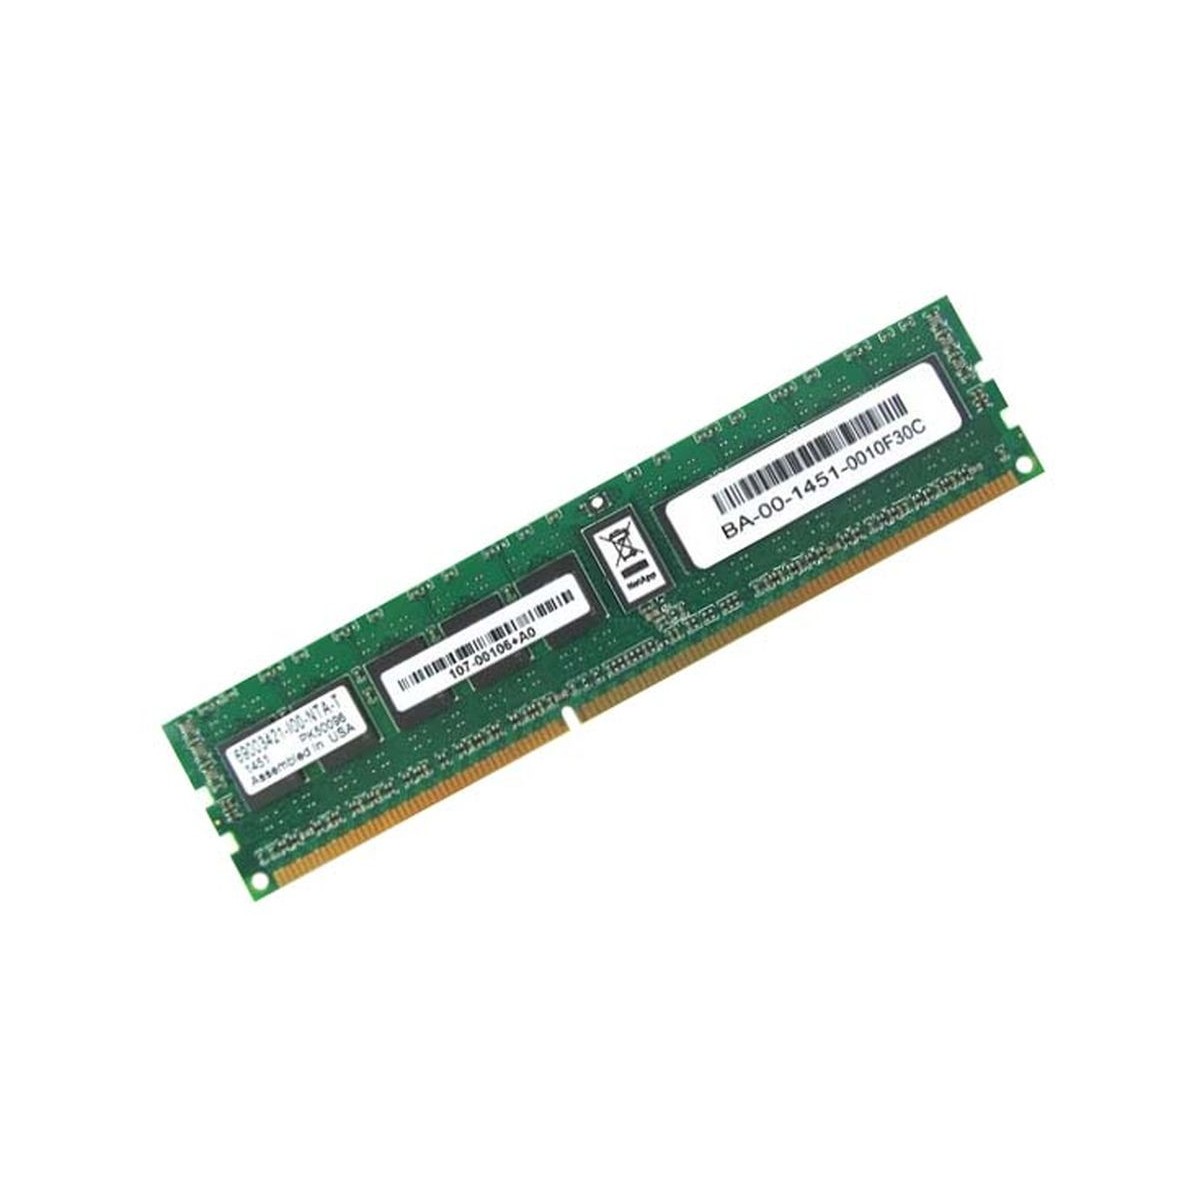 NETAPP 8GB PC3L-10600R ECC RDIMM 107-00106+A0